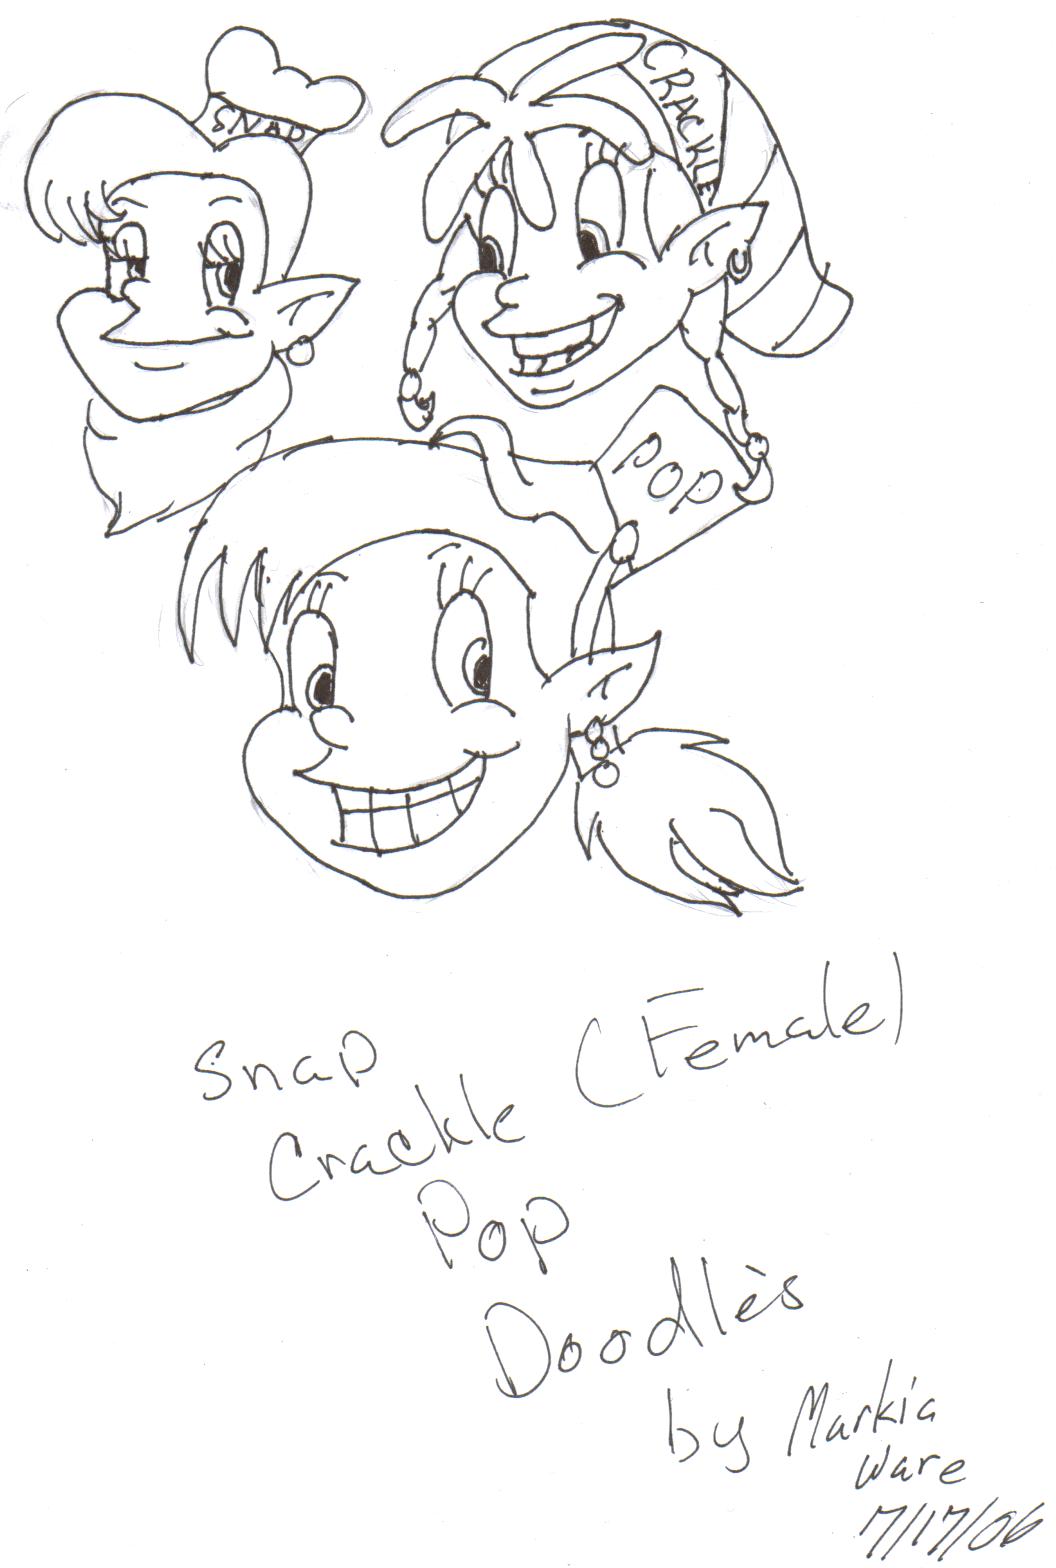 snap crackle pop coloring pages